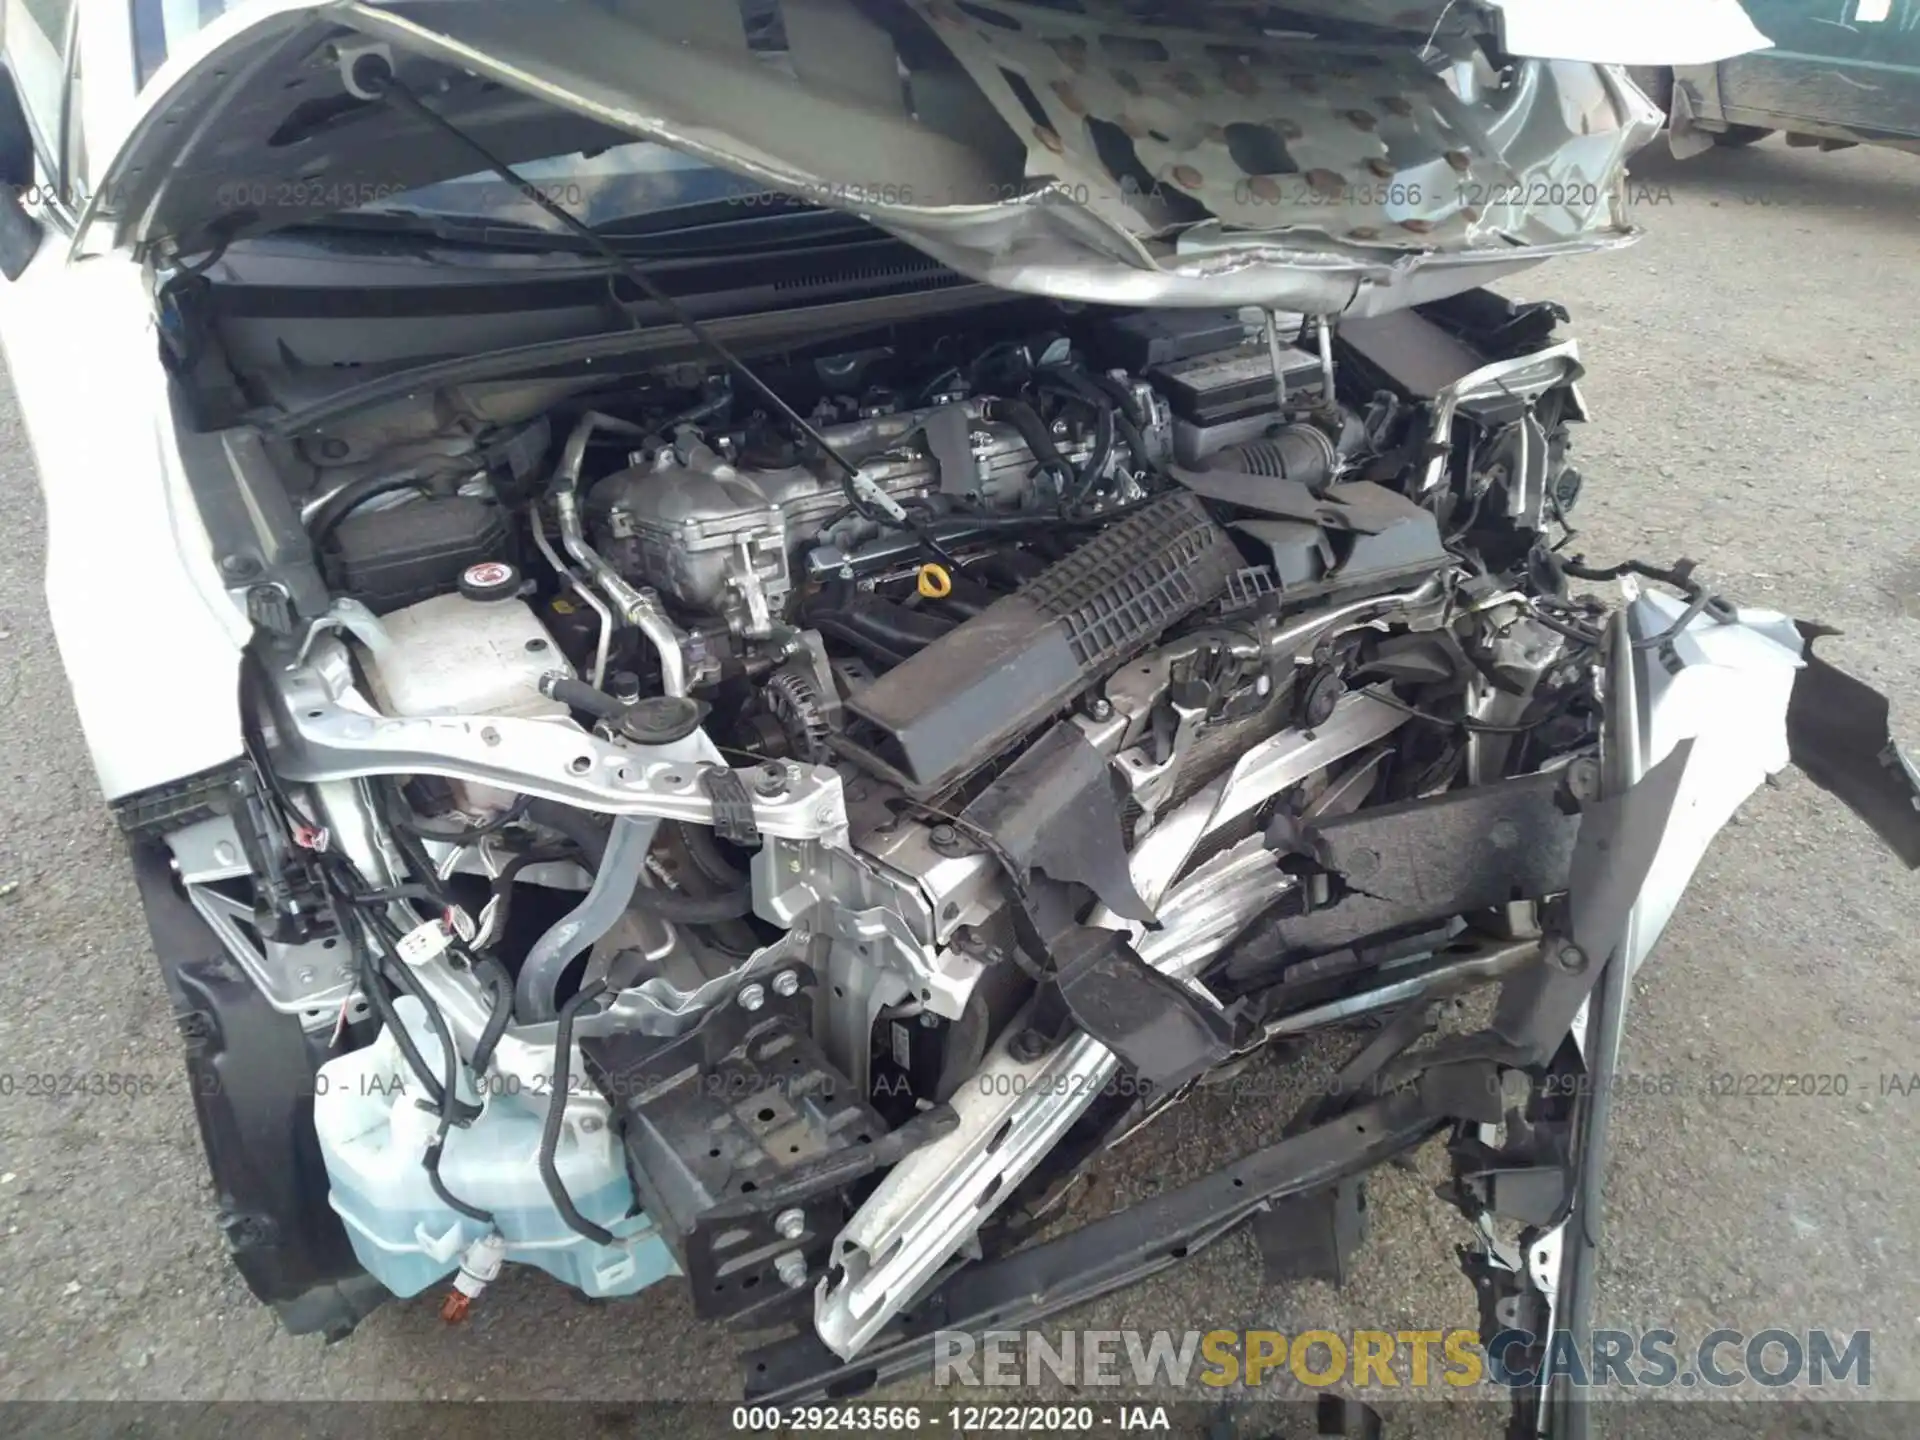 10 Photograph of a damaged car JTDEPRAE8LJ064561 TOYOTA COROLLA 2020